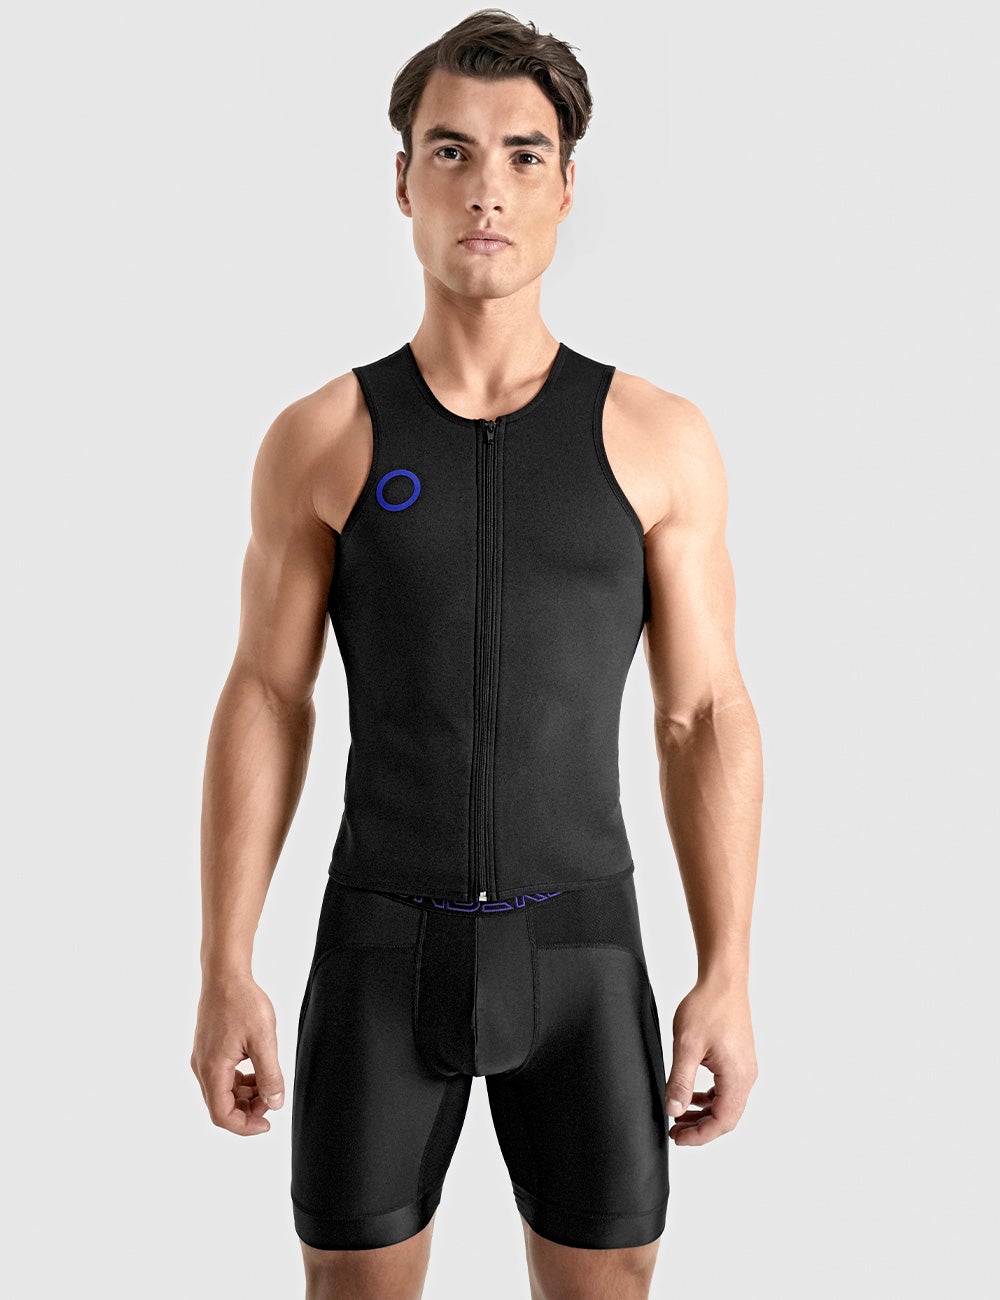 ACR Vest (Body Support) ACR Chest Compression Vest V4.0 Tingkatkan